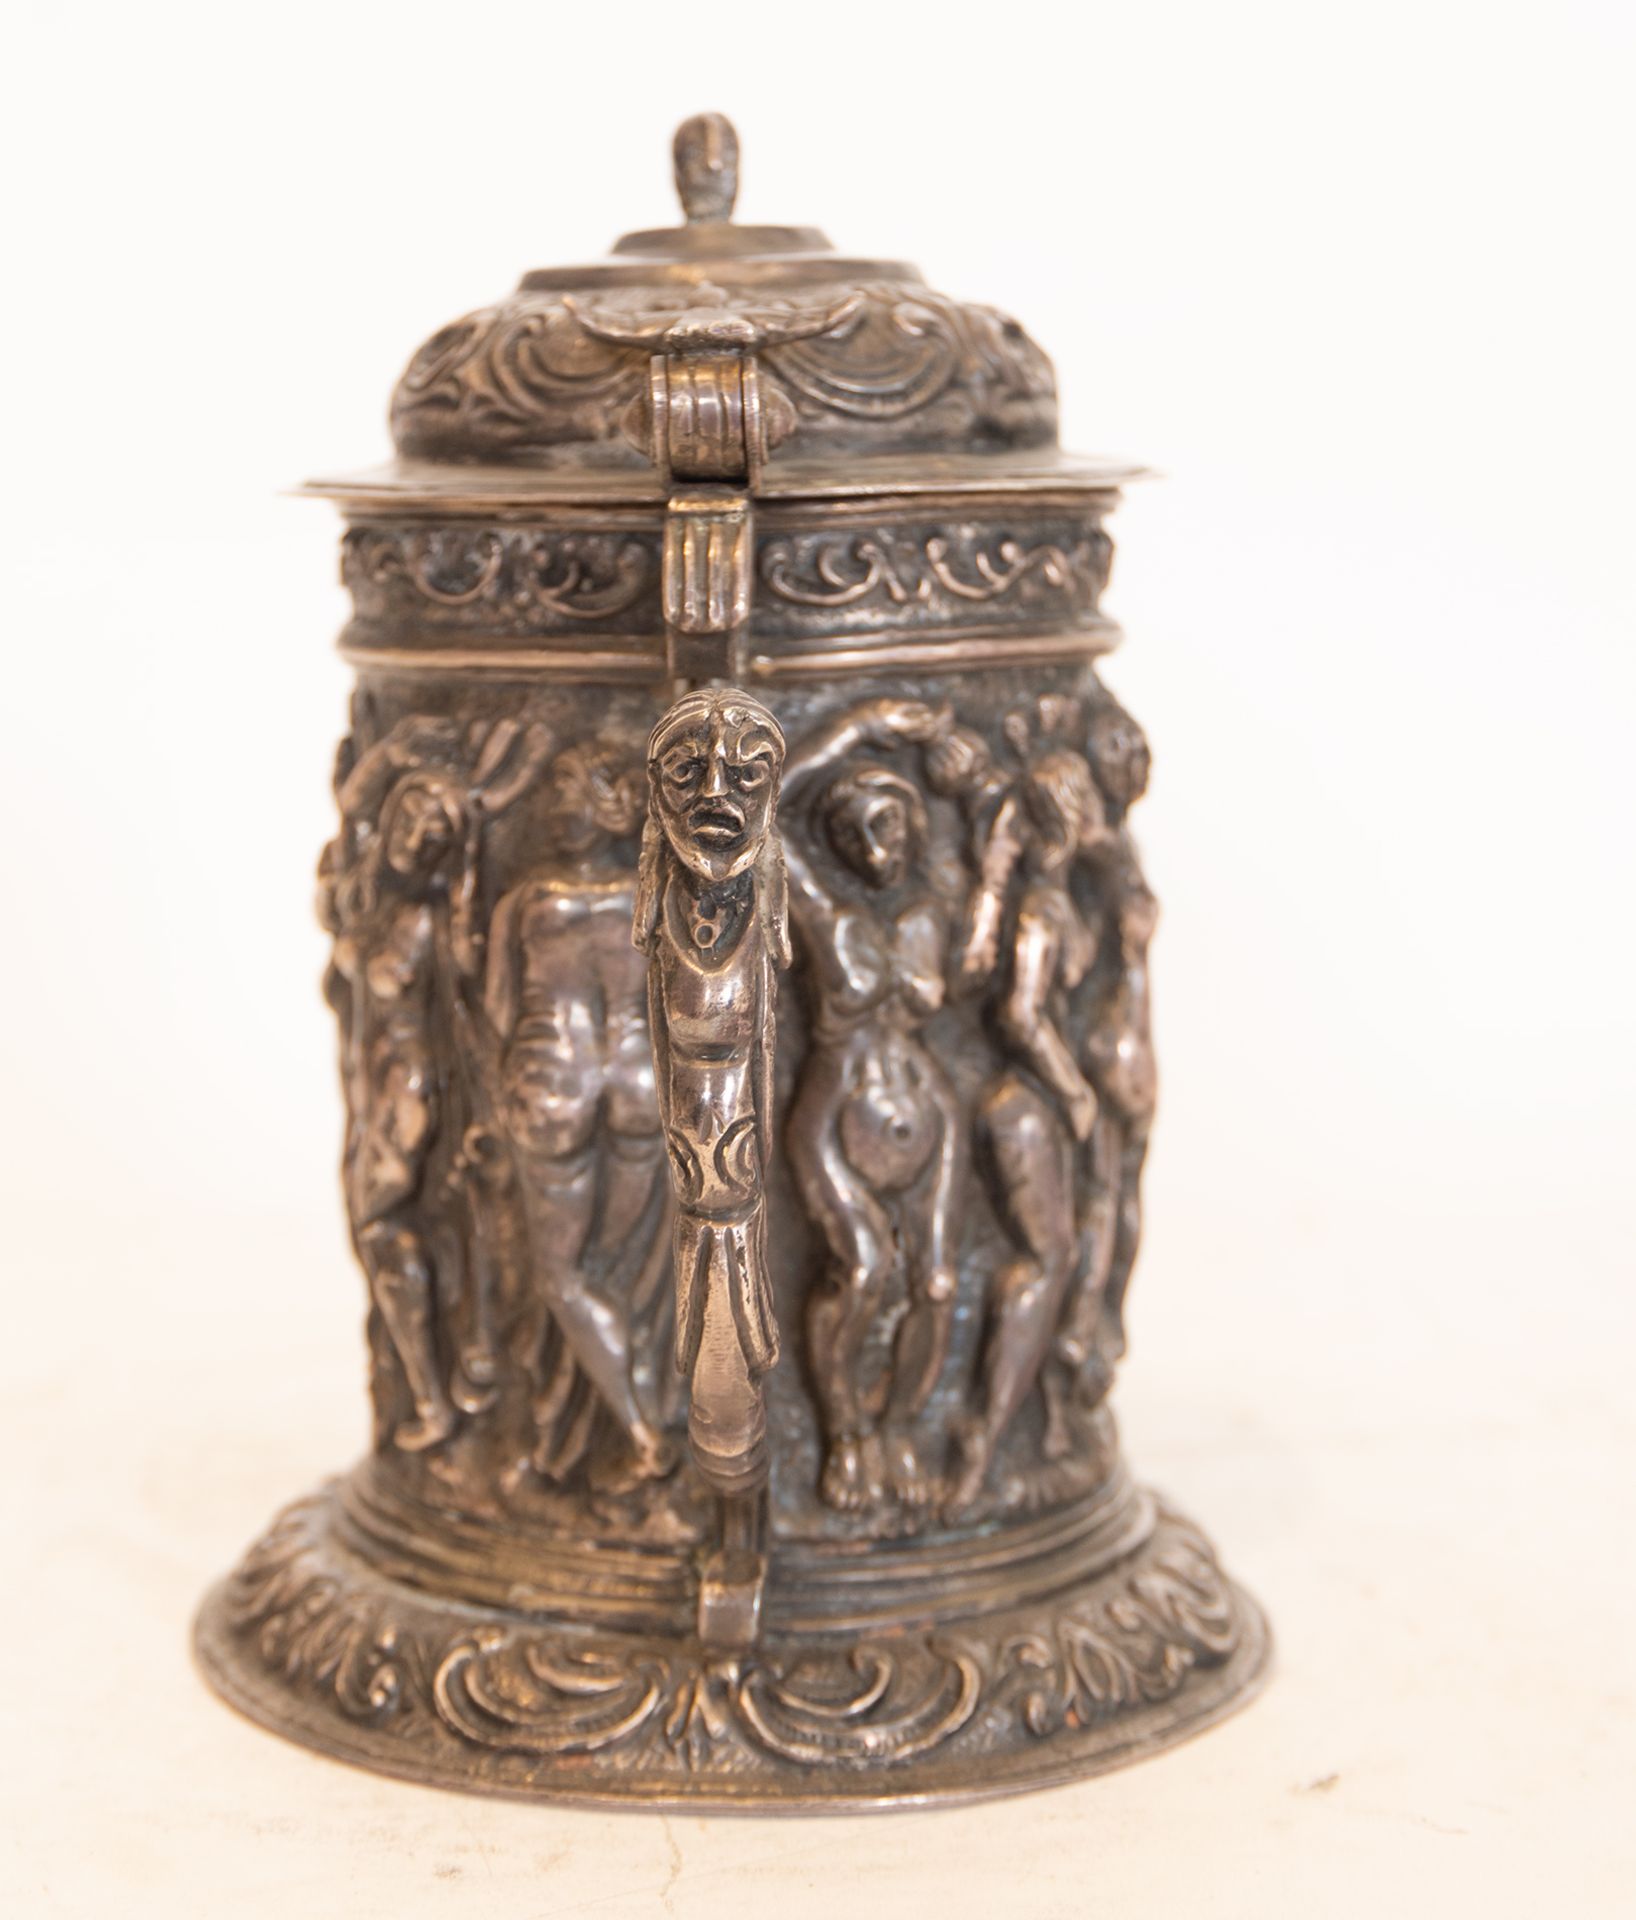 Tankard-type jug in Italian silver with Bacchanalian motifs, Italian school of the 18th - 19th centu - Image 4 of 5